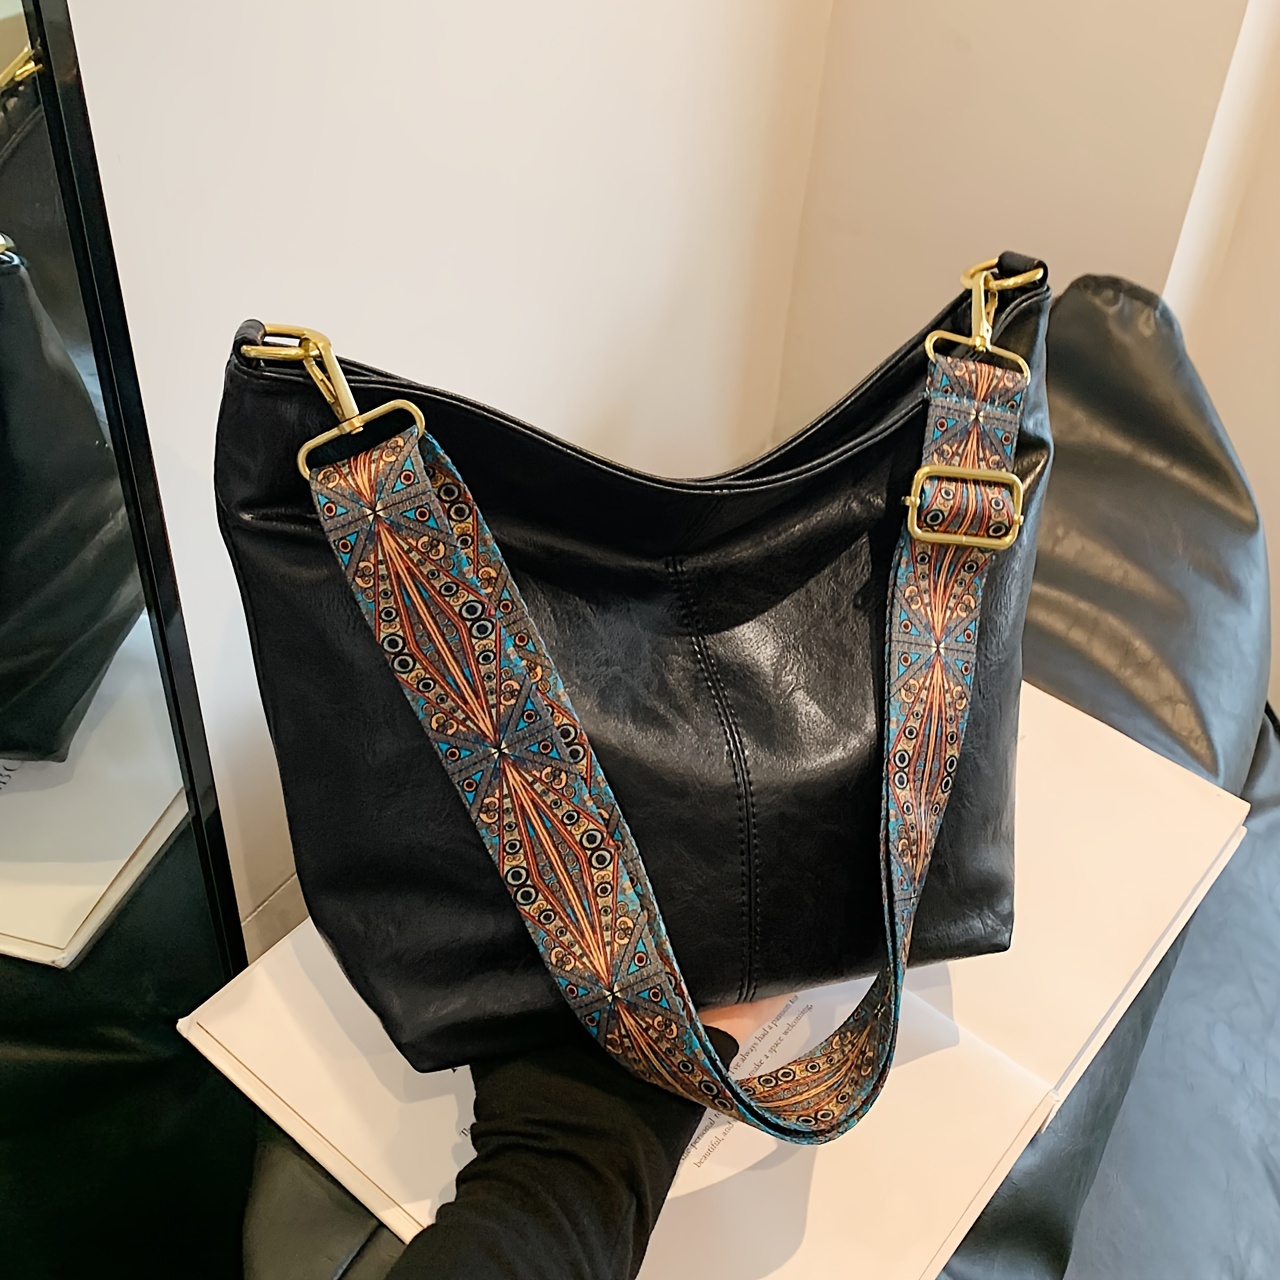 Crossbody Bag for Women Leather Hobo Handbags Guitar Strap Purse